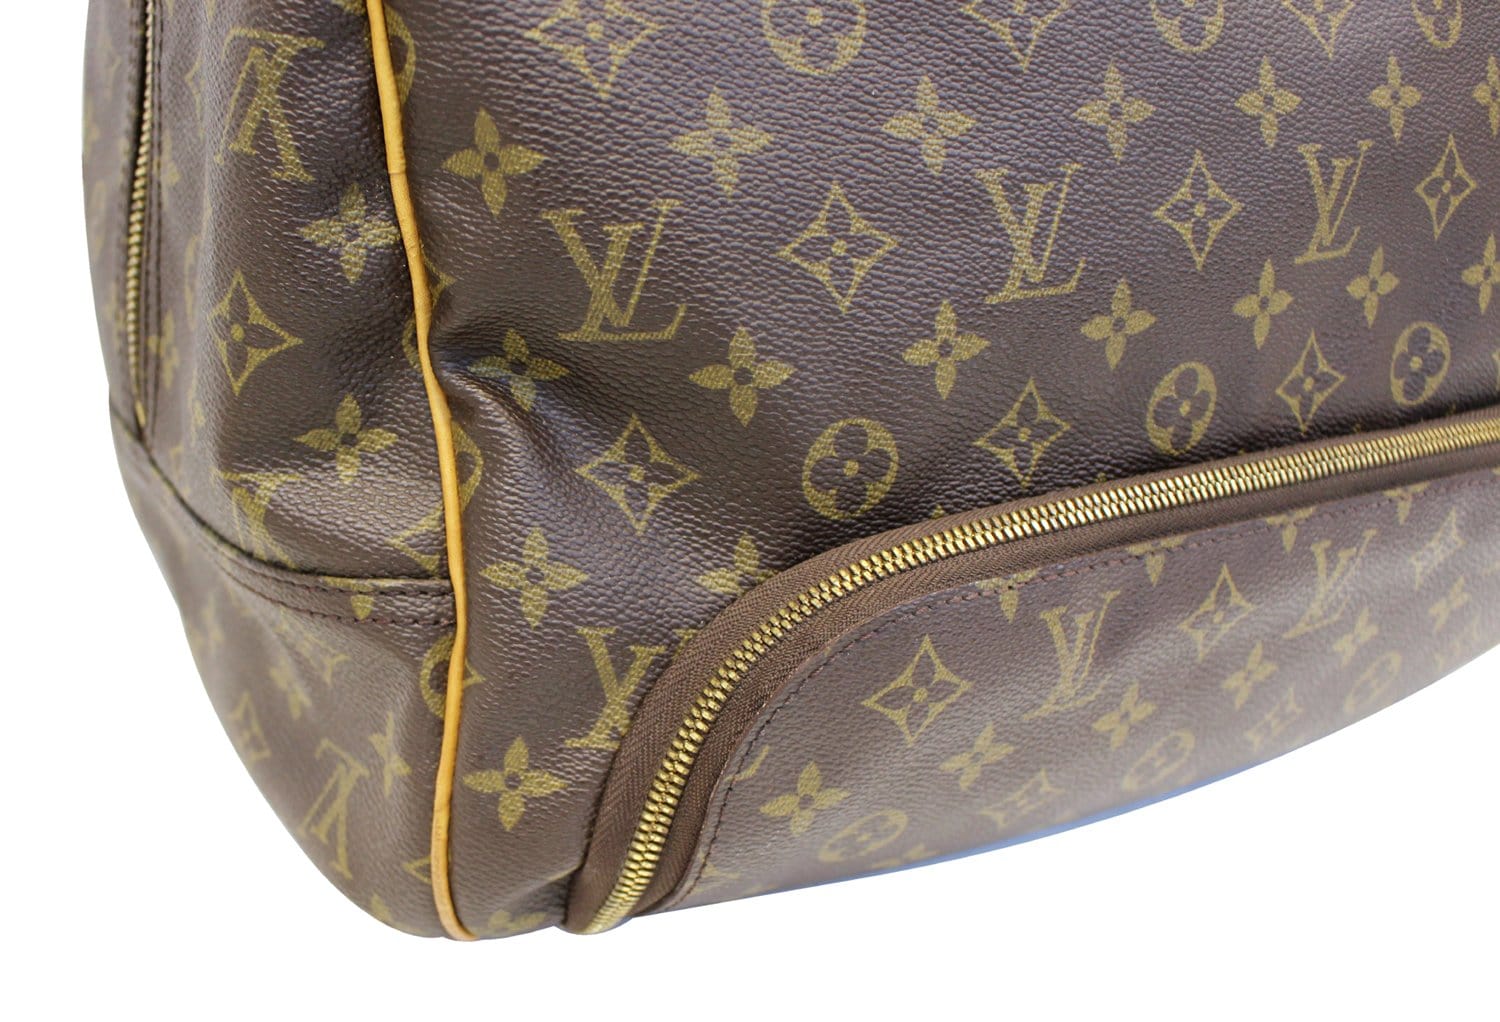 Louis Vuitton Evasion Travel Bag Monogram Canvas mm Brown